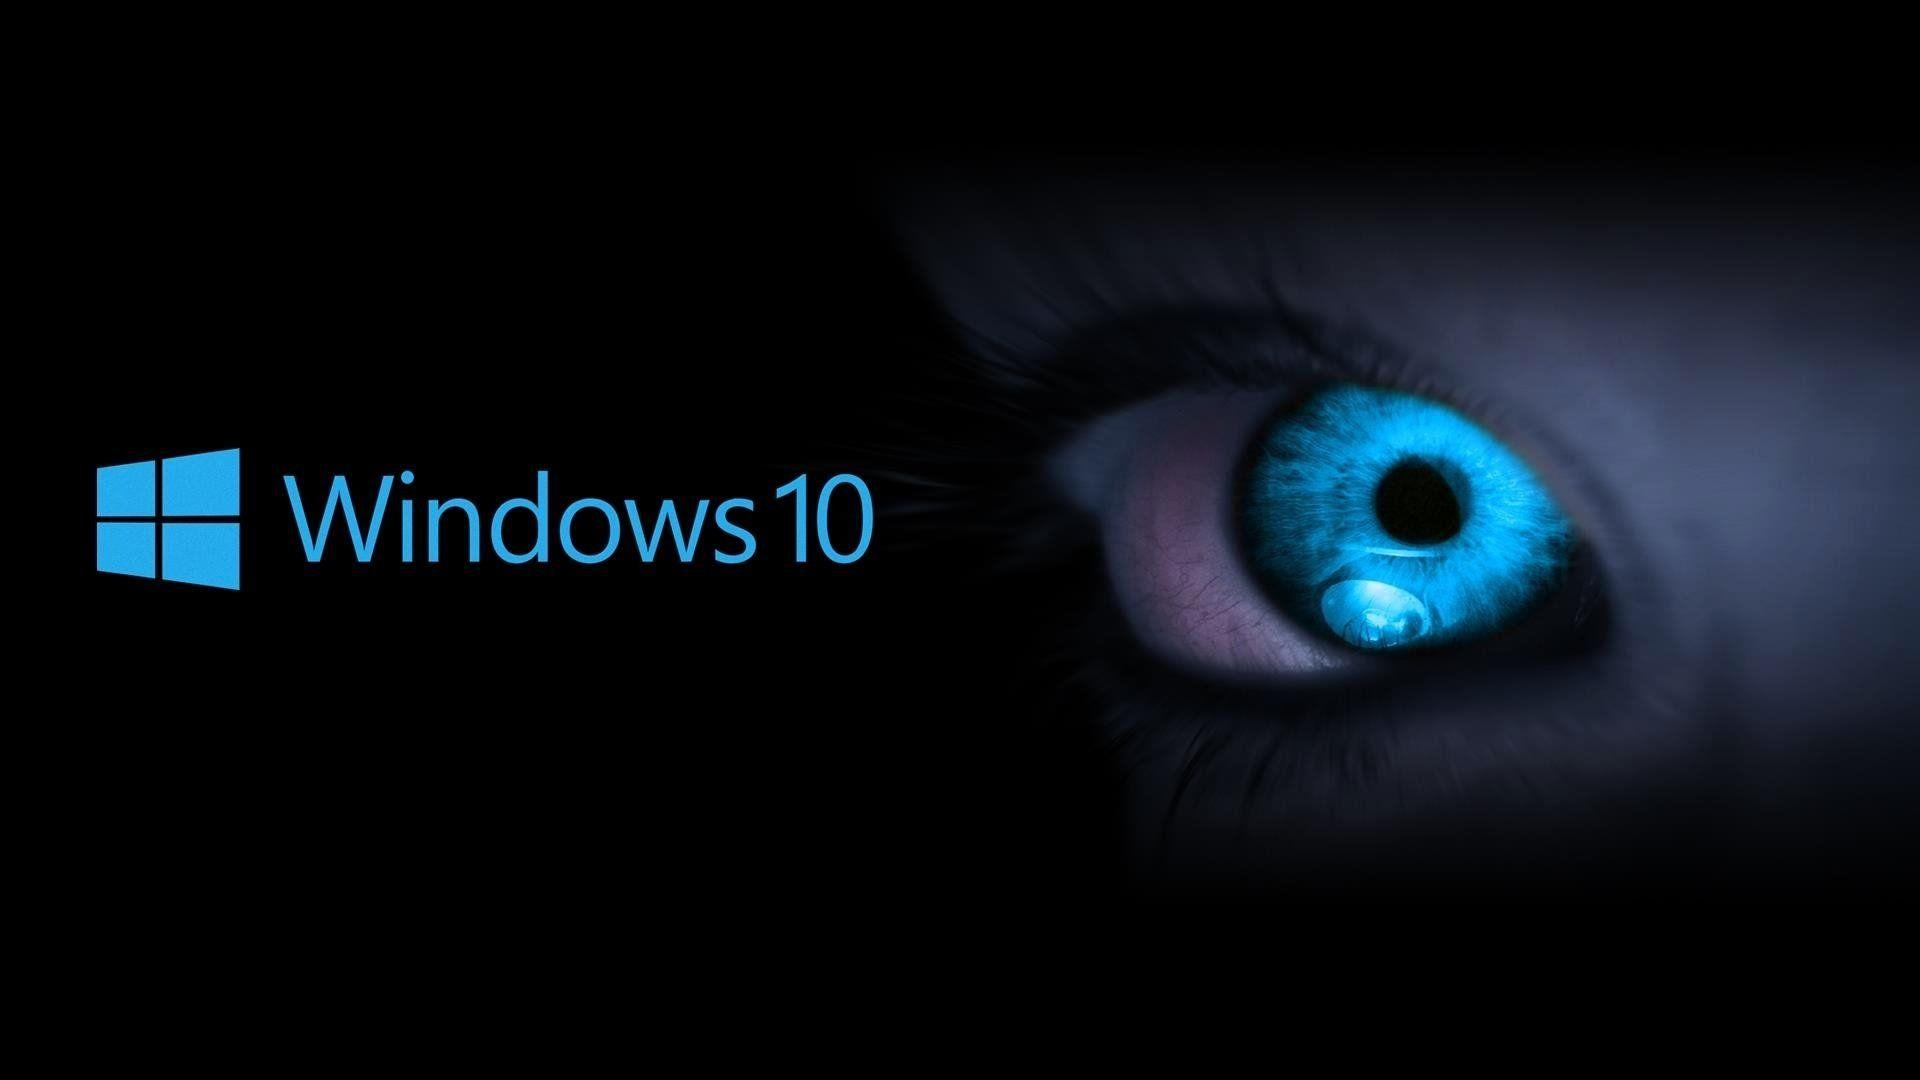 Windows 10 Hd Wallpapers Top Free Windows 10 Hd Backgrounds Wallpaperaccess